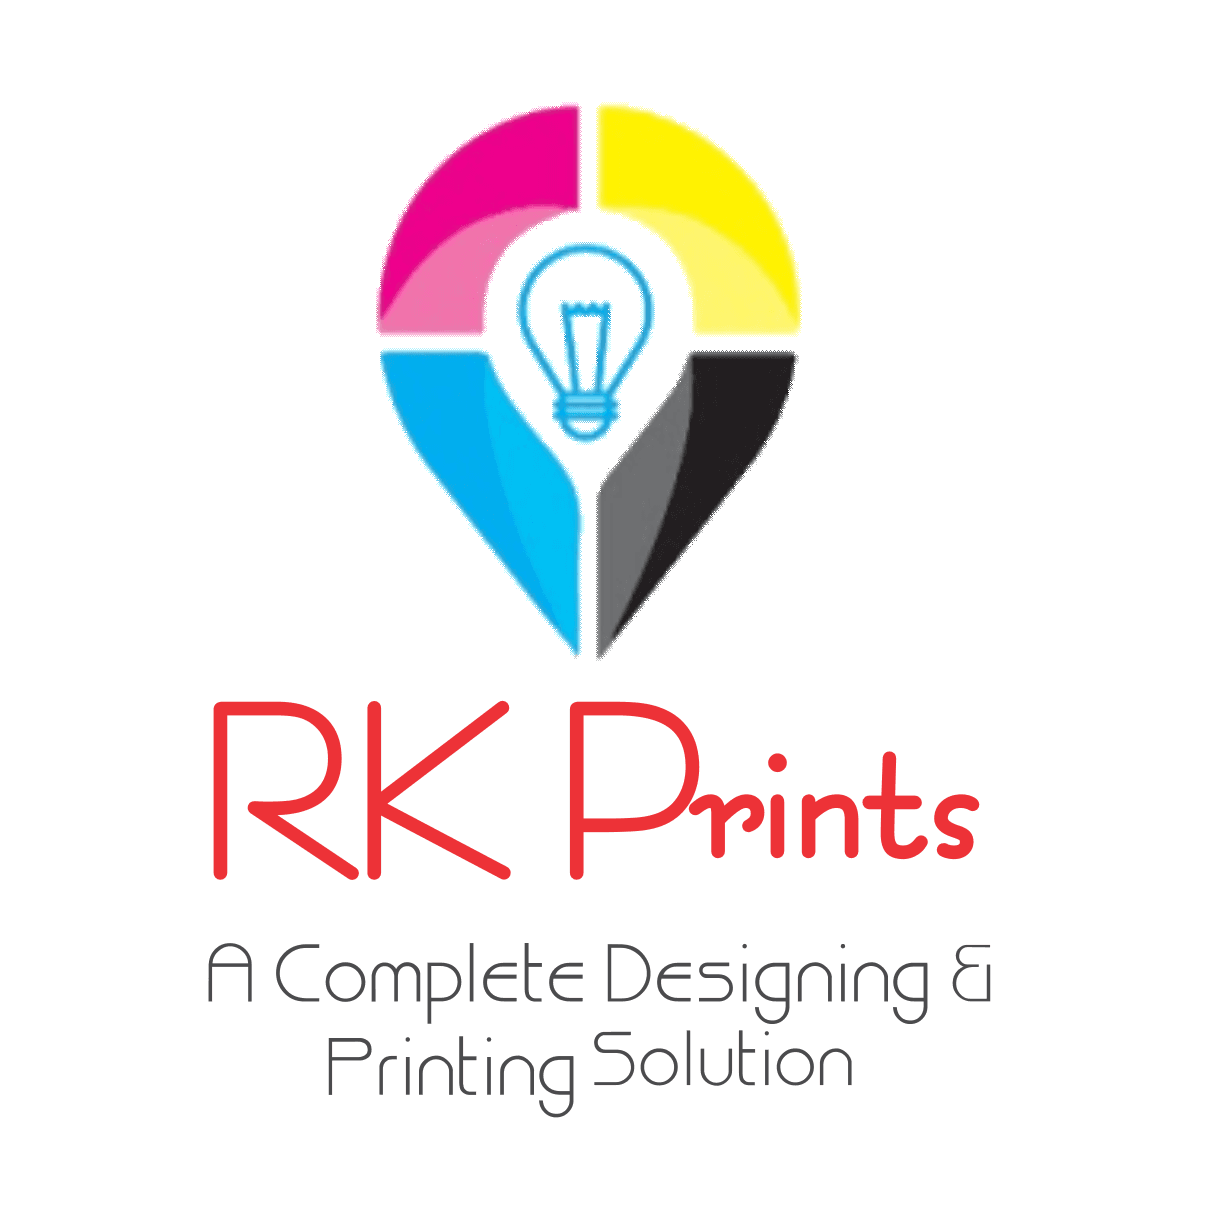 RK Prints